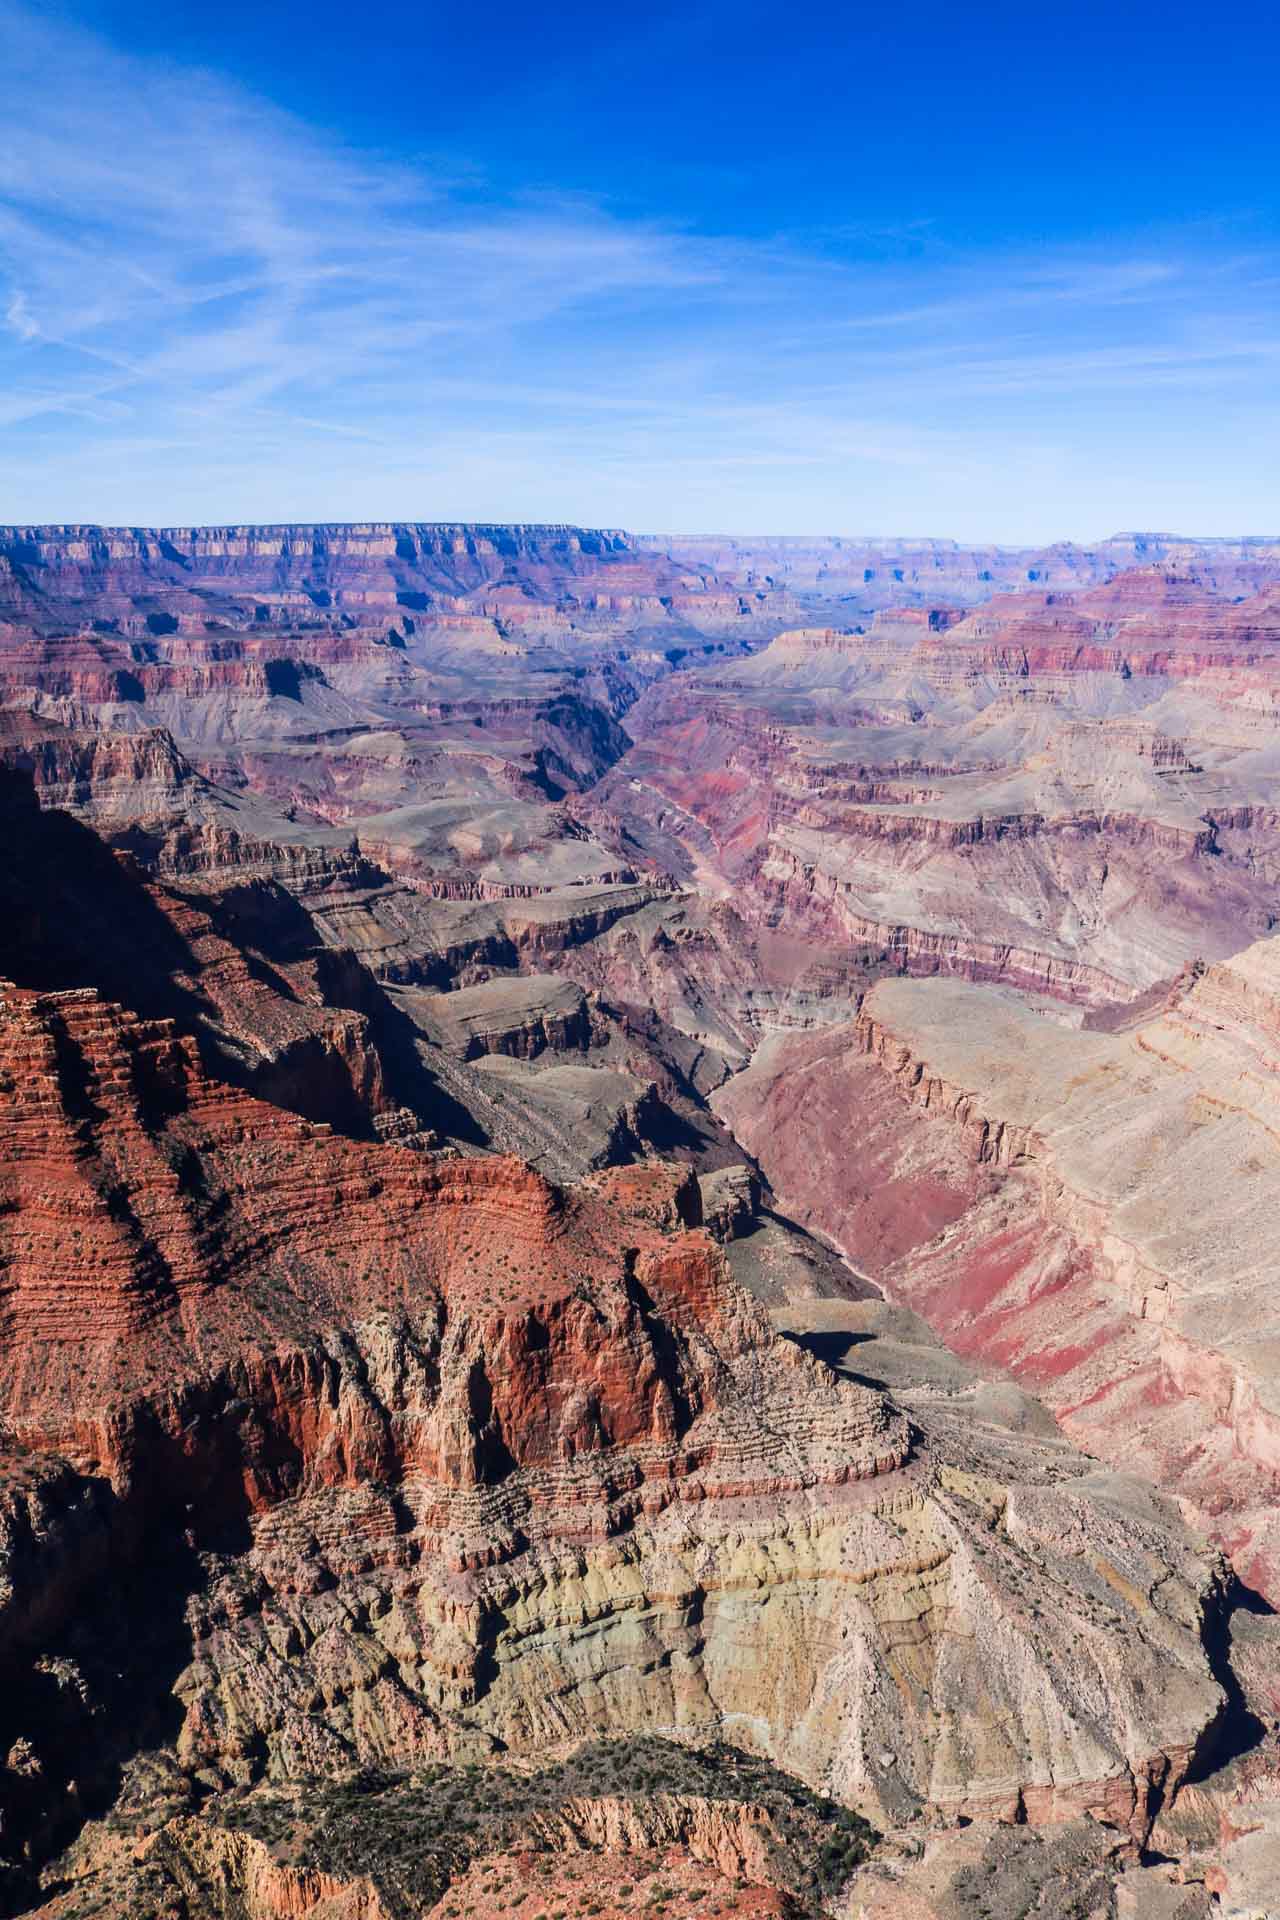 Lipan Point views of Grand Canyon National Park